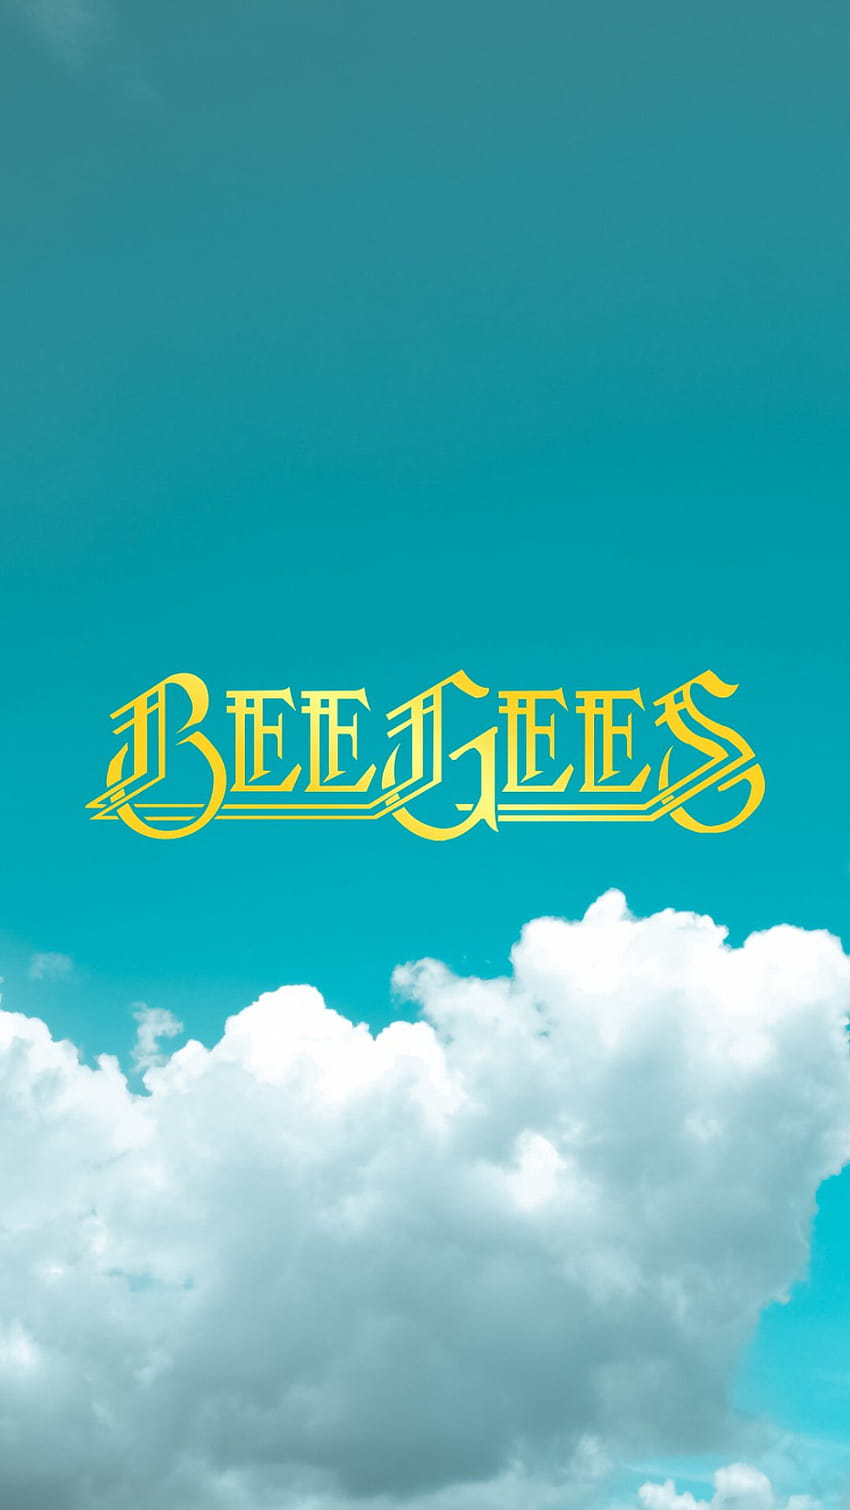 Bee Gees na Twitterze w 2020 roku, logo Bee Gees Tapeta na telefon HD